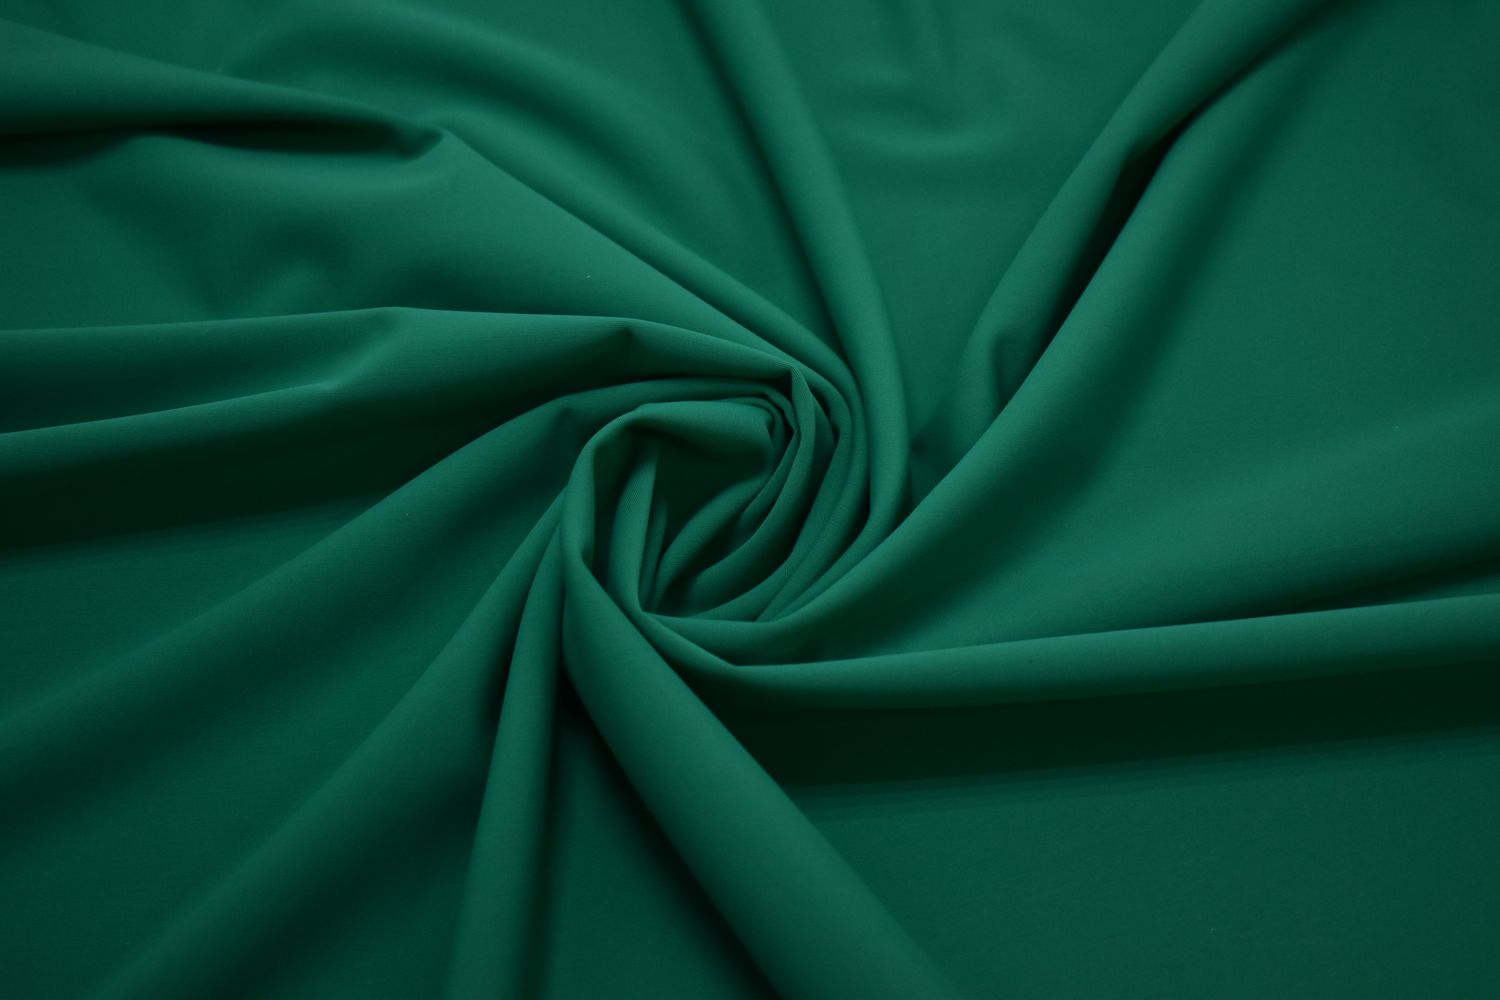 Бифлекс матовый зеленого цвета W-125780